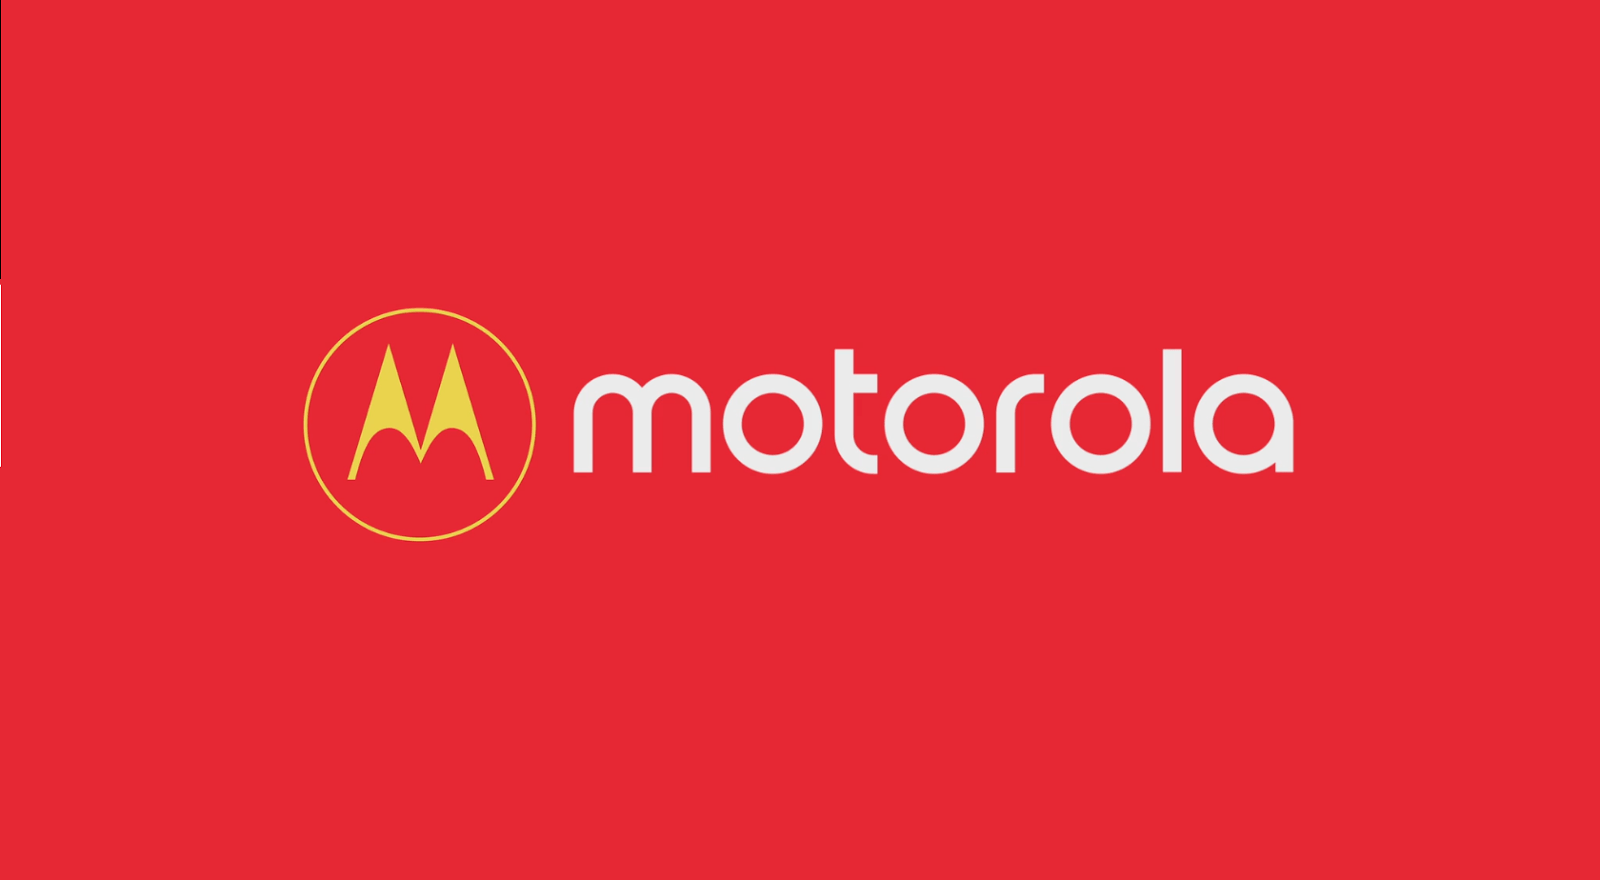 Old Motorola Logo - January 2016 saddest day for Motorola Fans